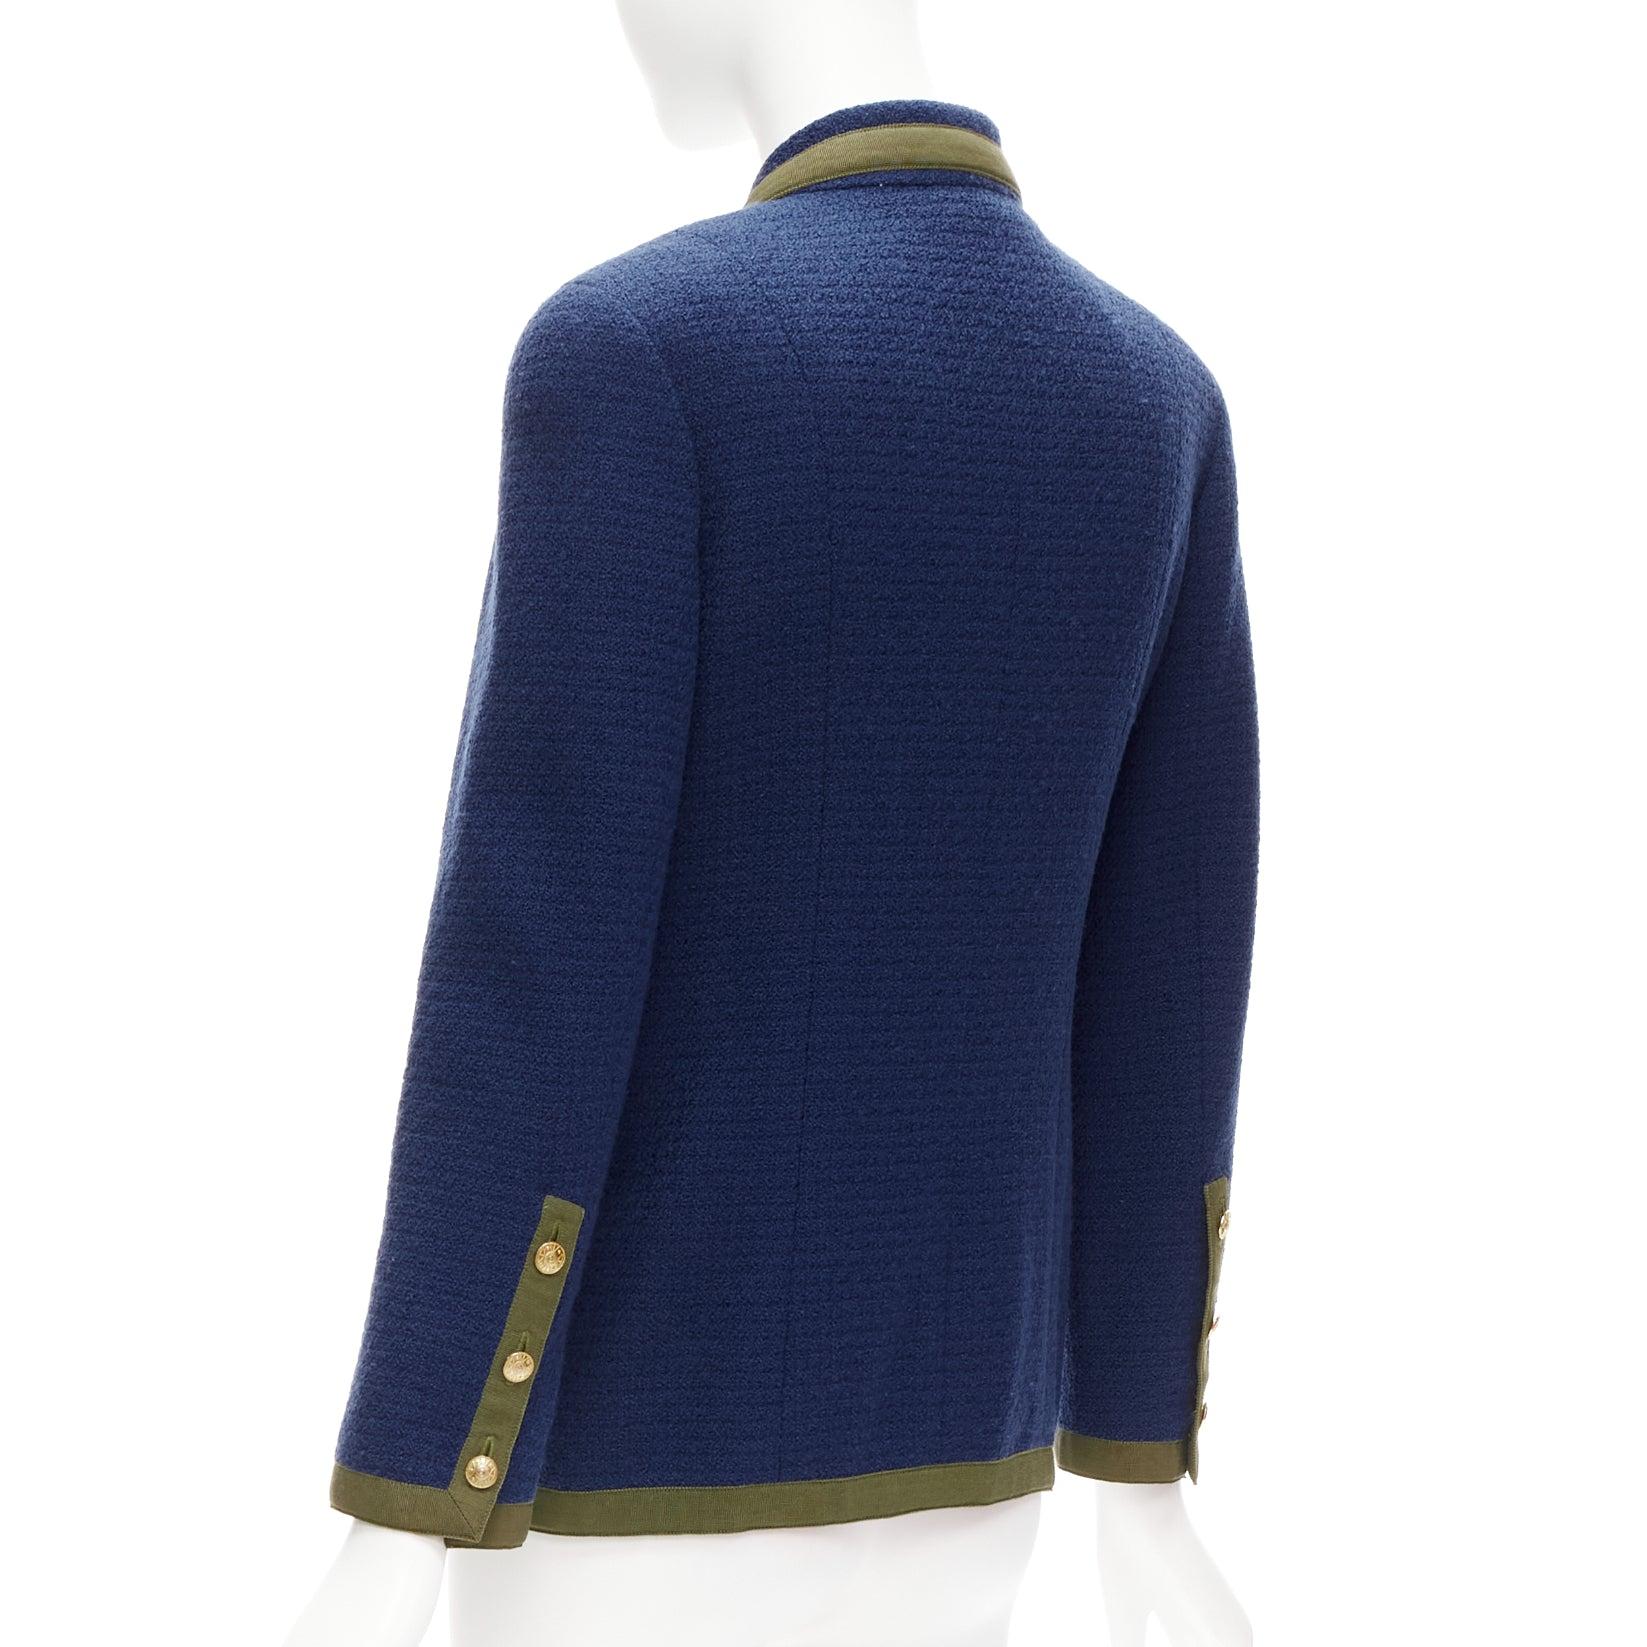 CHANEL Vintage 28931 navy green blue 4 pocket wool tweed jacket FR36 S 1